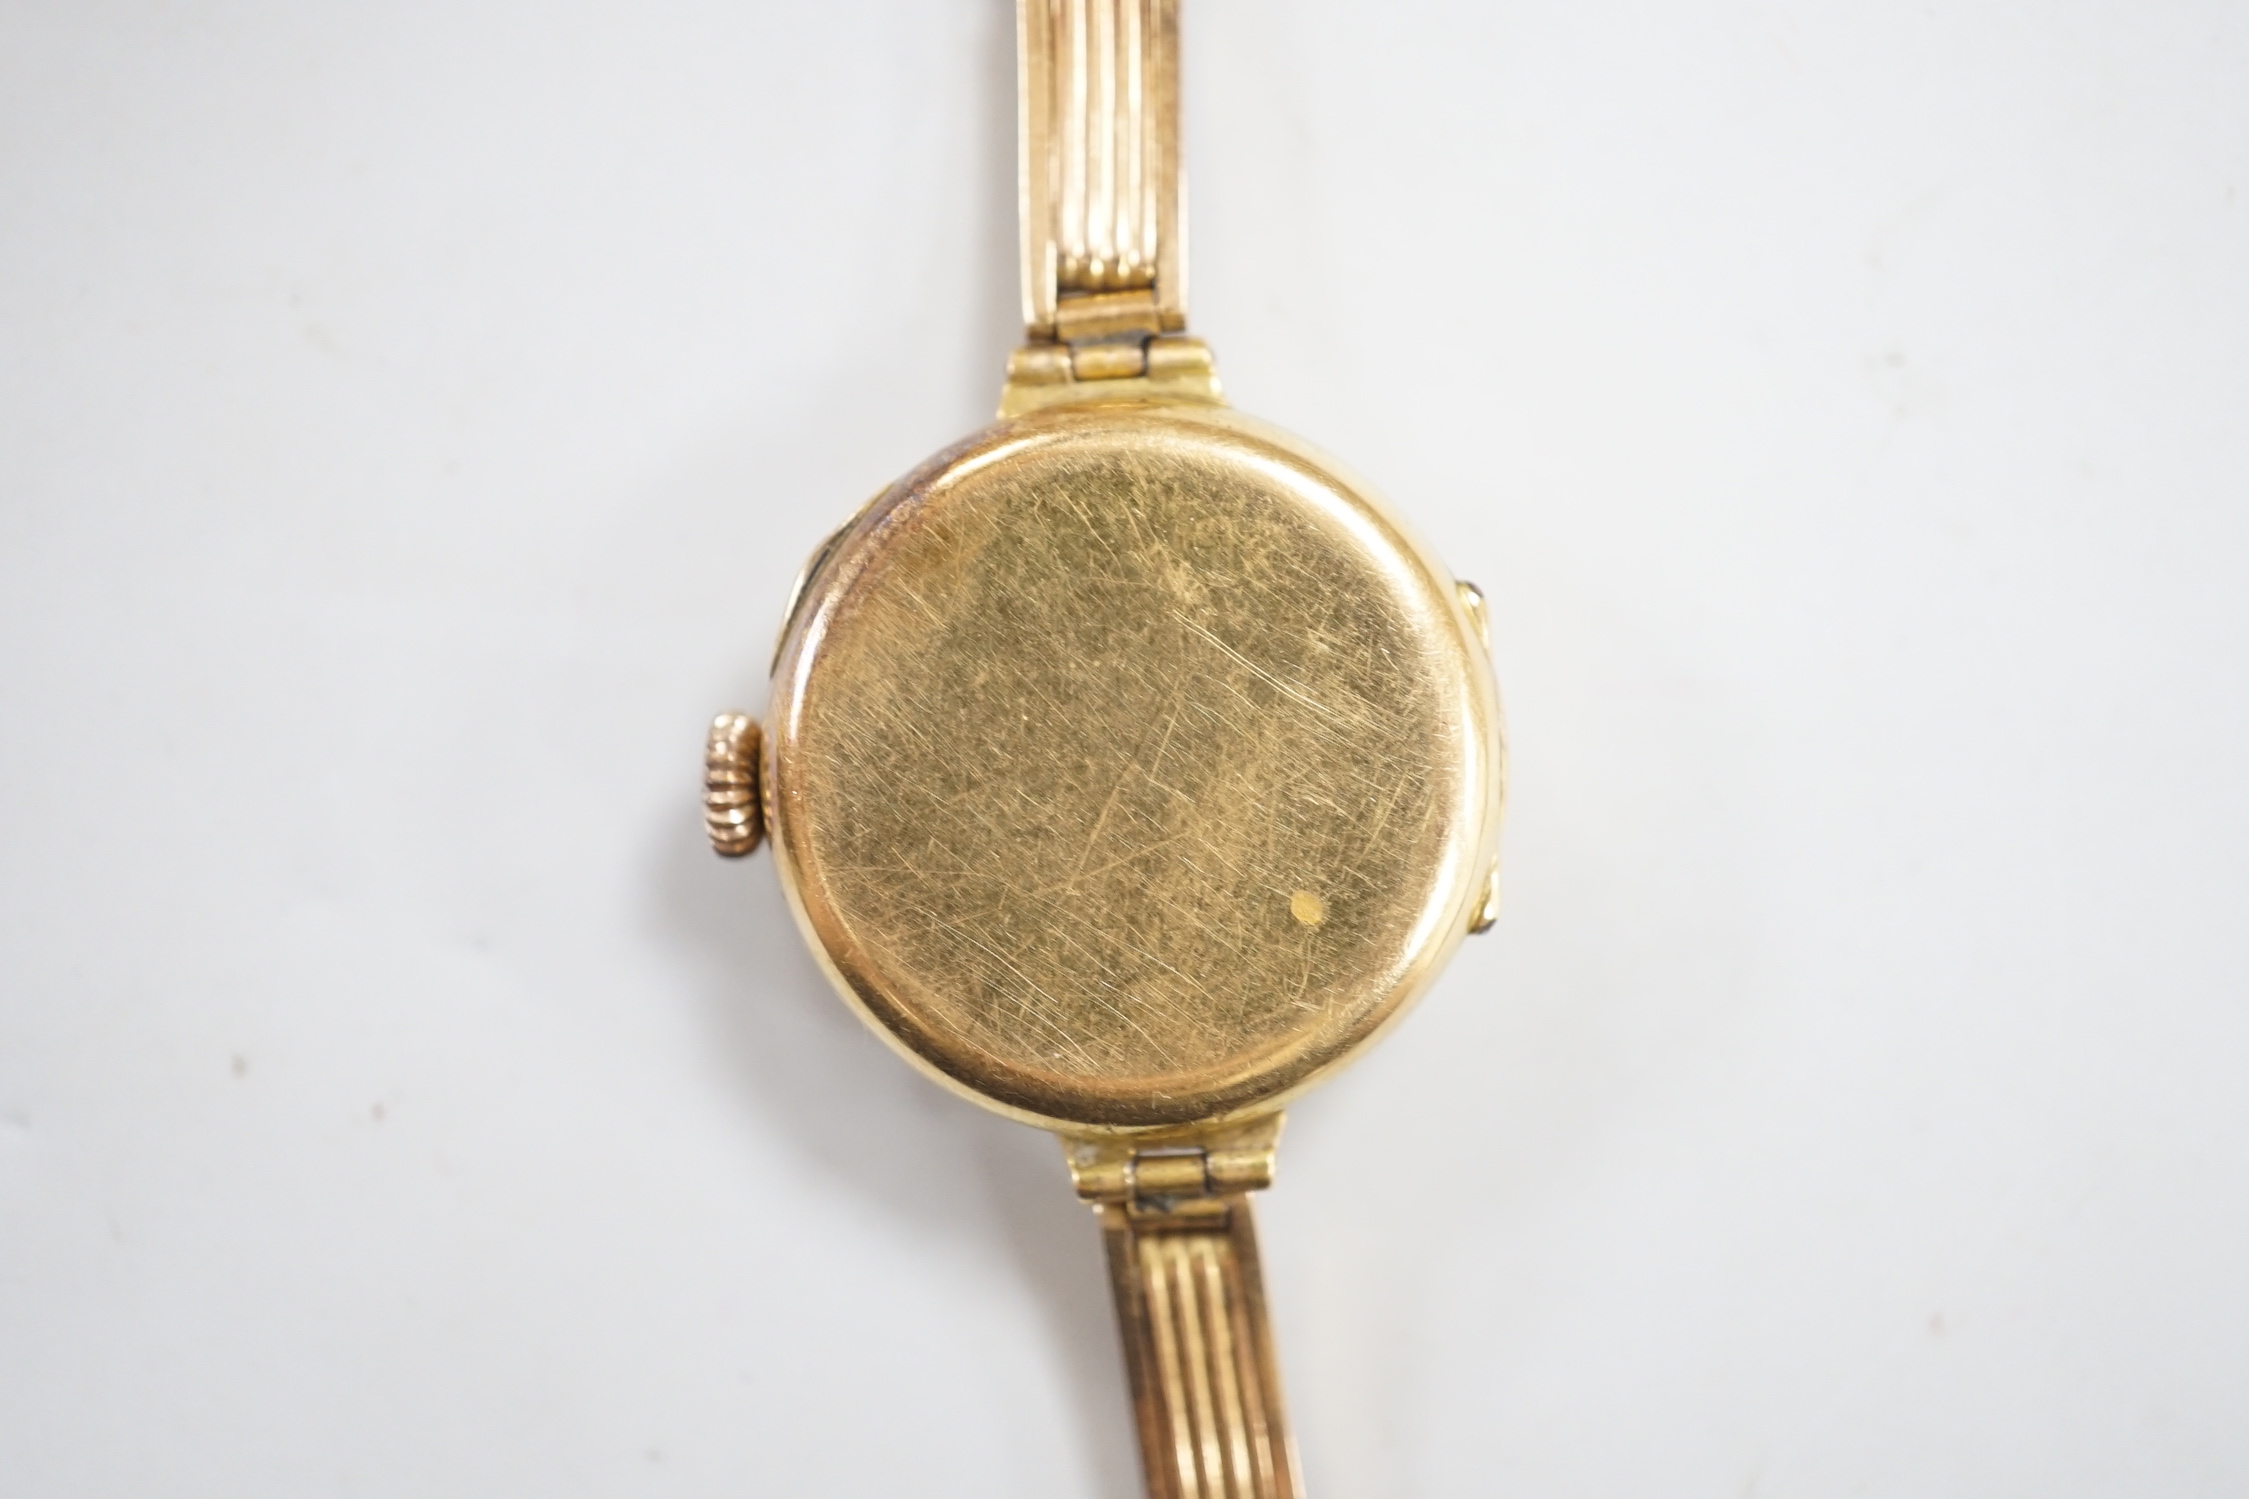 An early 20th century 18ct gold manual wind wrist watch, on an 18ct flexible bracelet, case diameter 25mm, gross weight 25.9 grams.